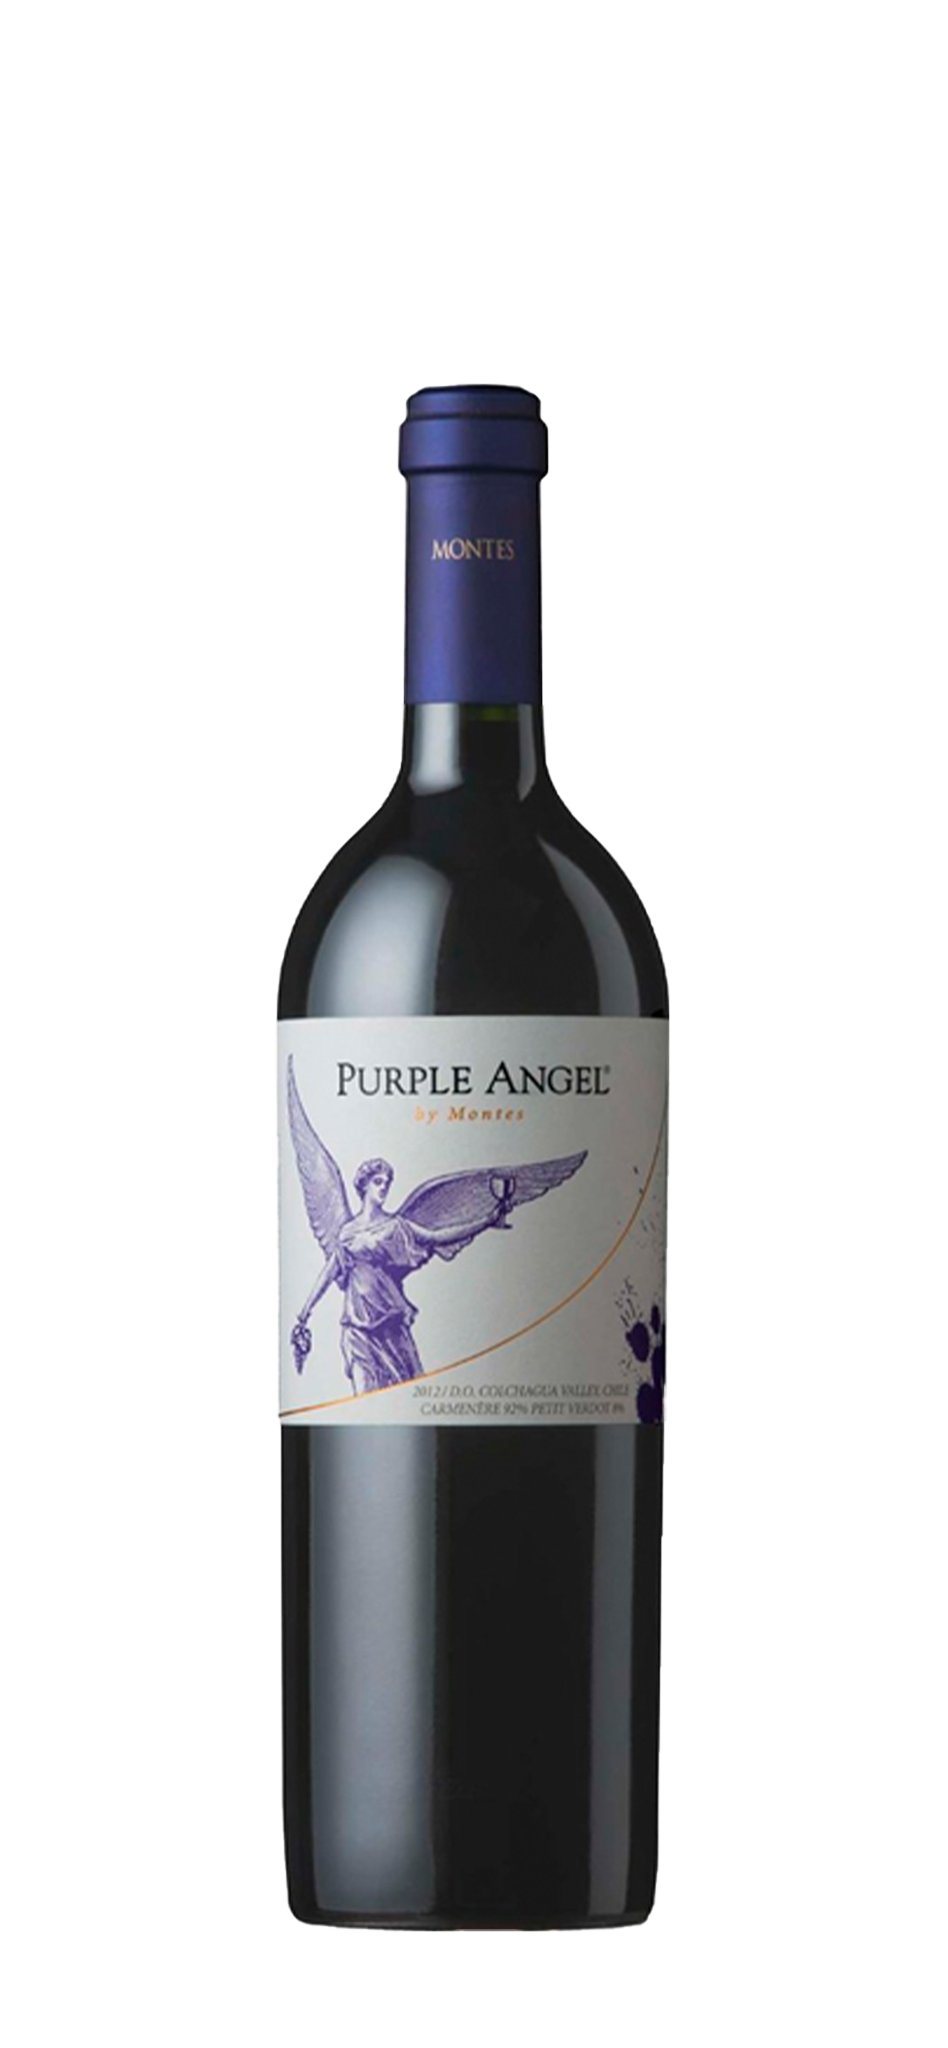 MONTES Purple Angel Magnum - 2015